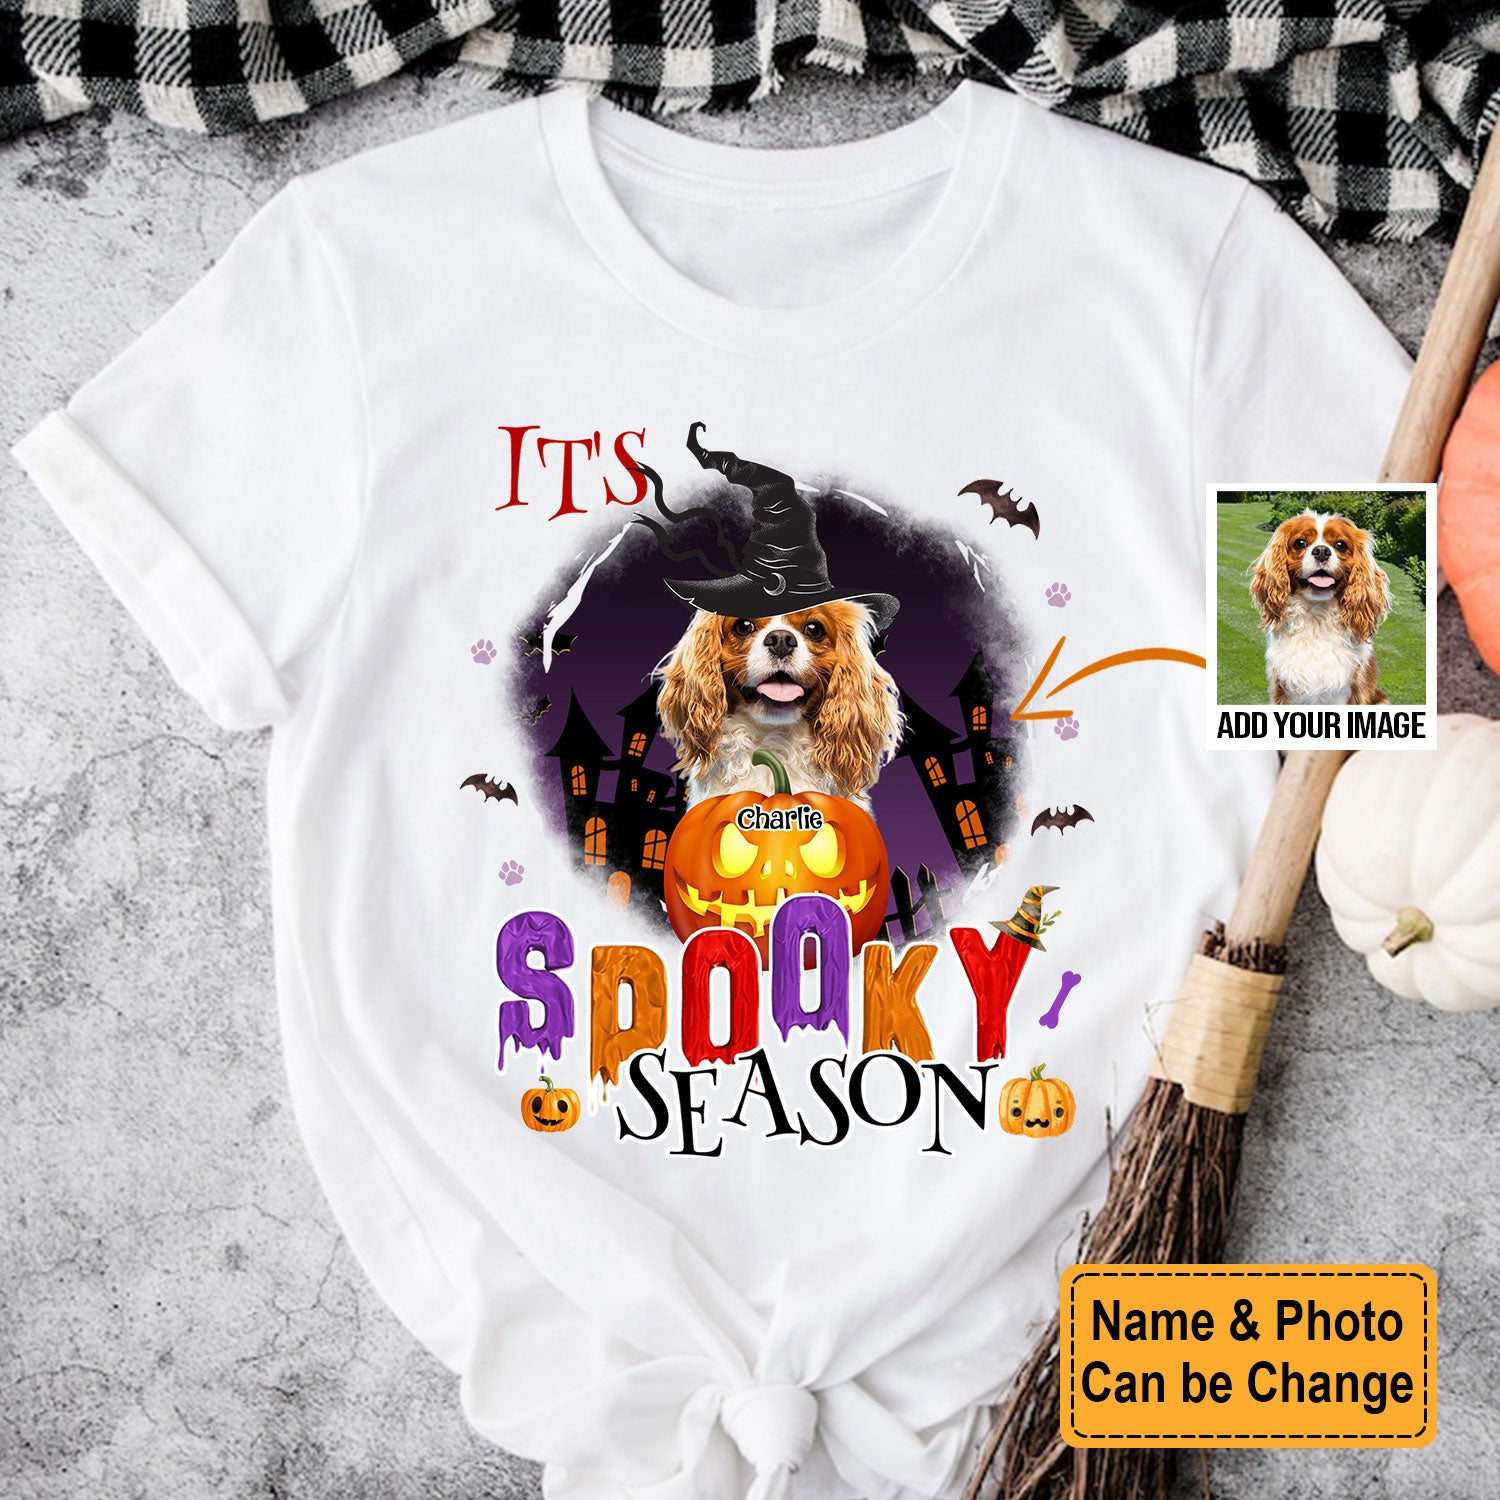 Halloween Sweet Funny Gifts For Dog Mom, Dog Lovers, Custom Dog Photo And Name T-Shirt Sweatshirt Hoodie, It's Spooky Season Shirt